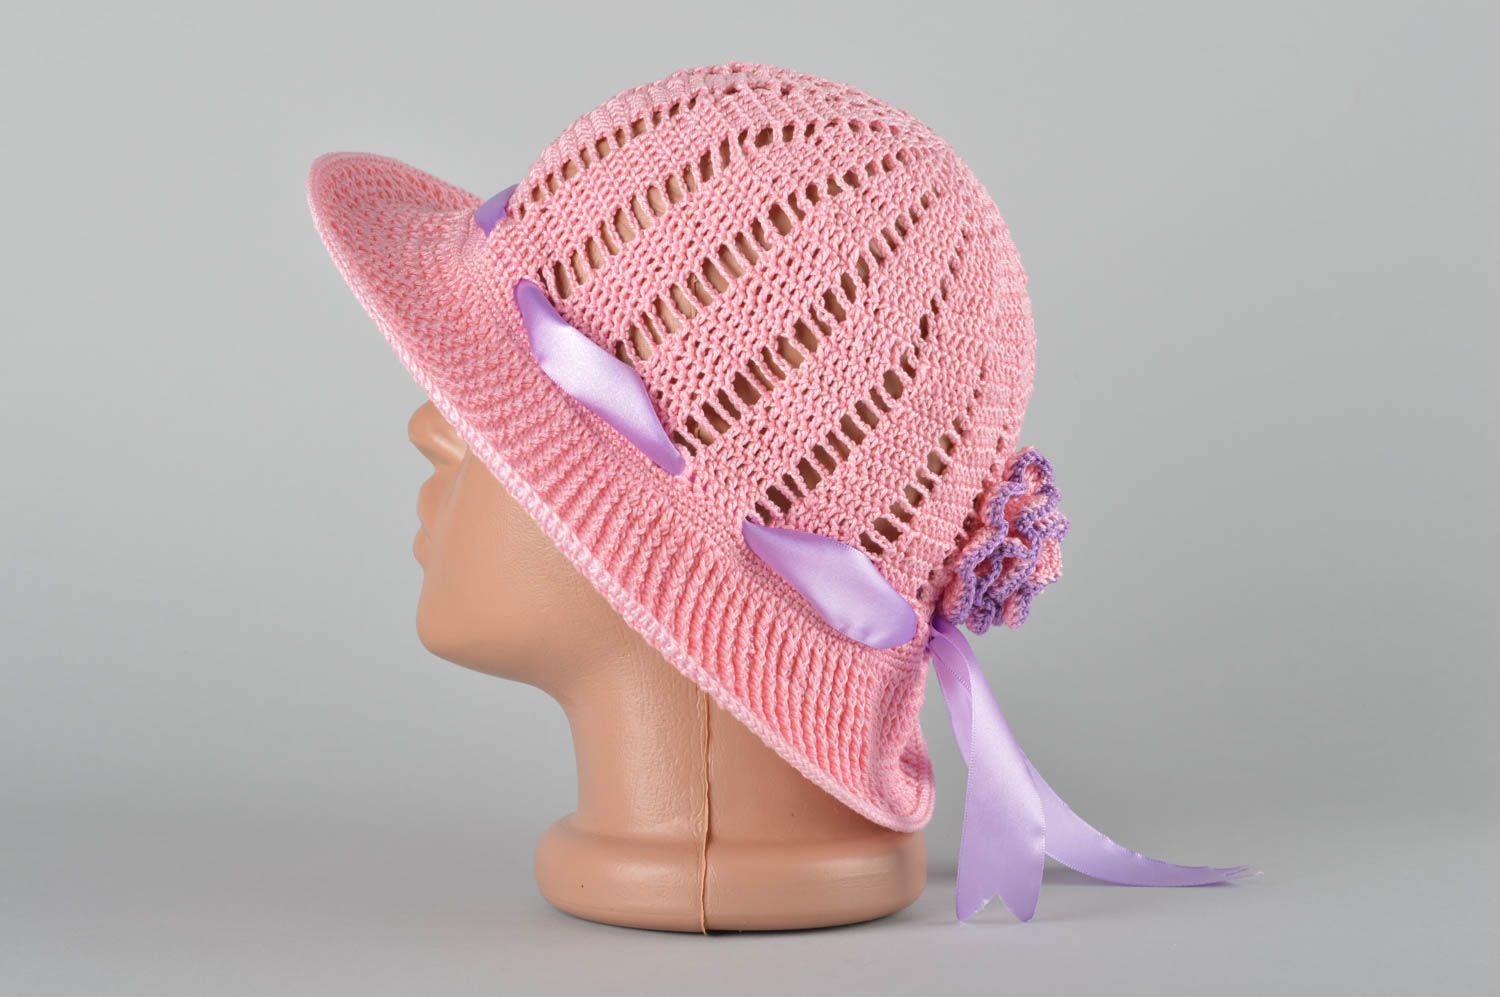 Handmade hat crocheted hat summer hat stylish hat women hat gift for women photo 2